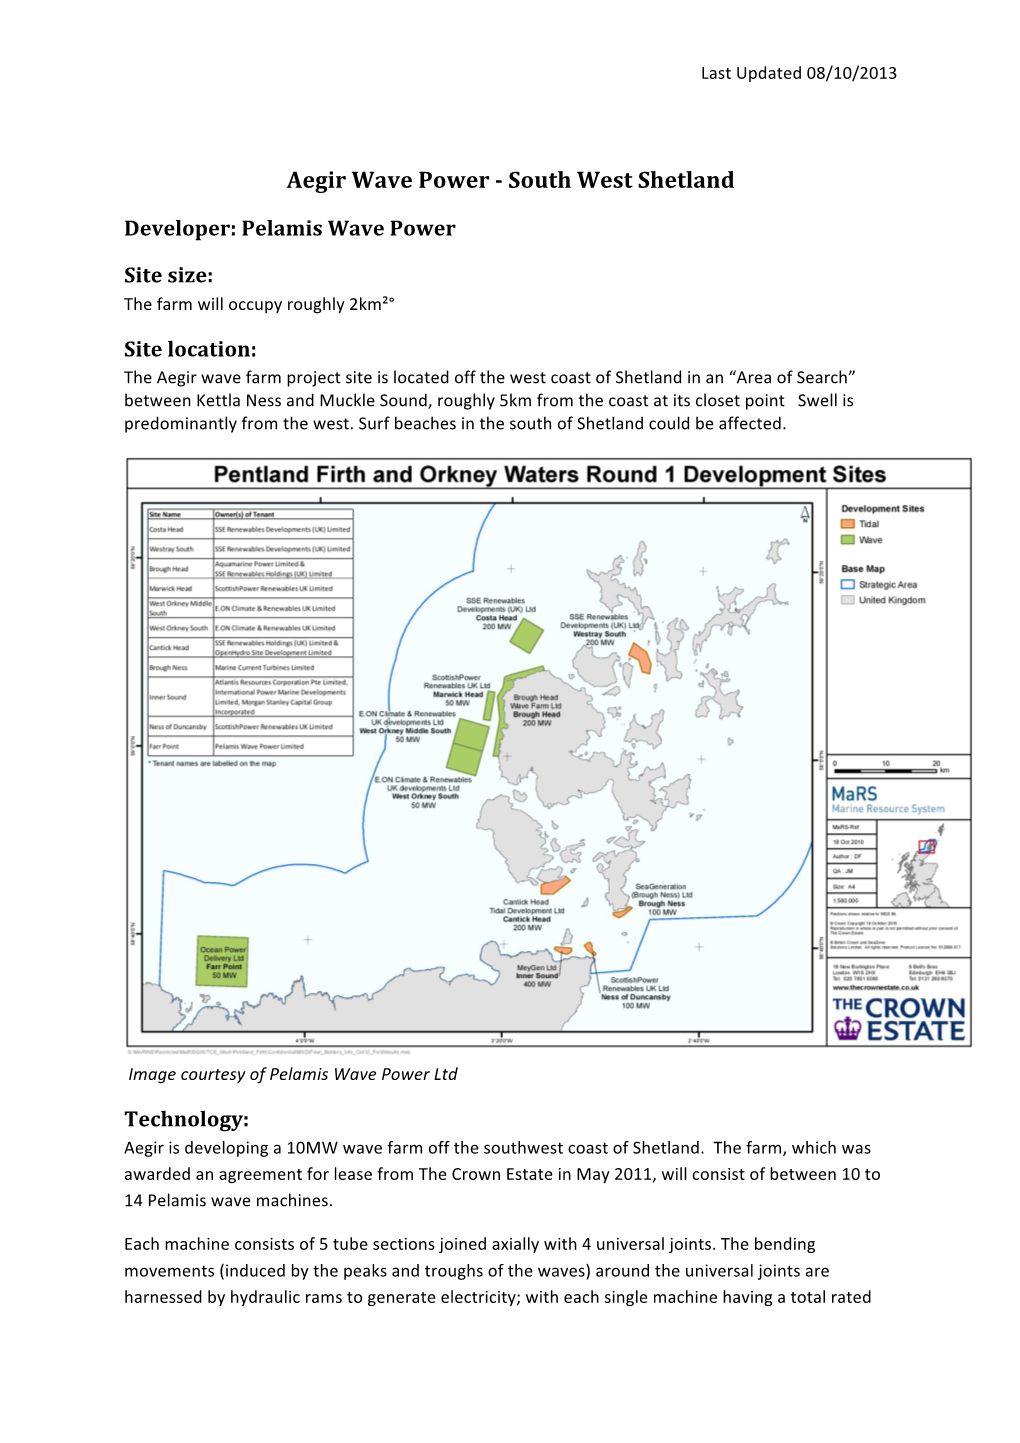 Aegir Wave Power - South West Shetland